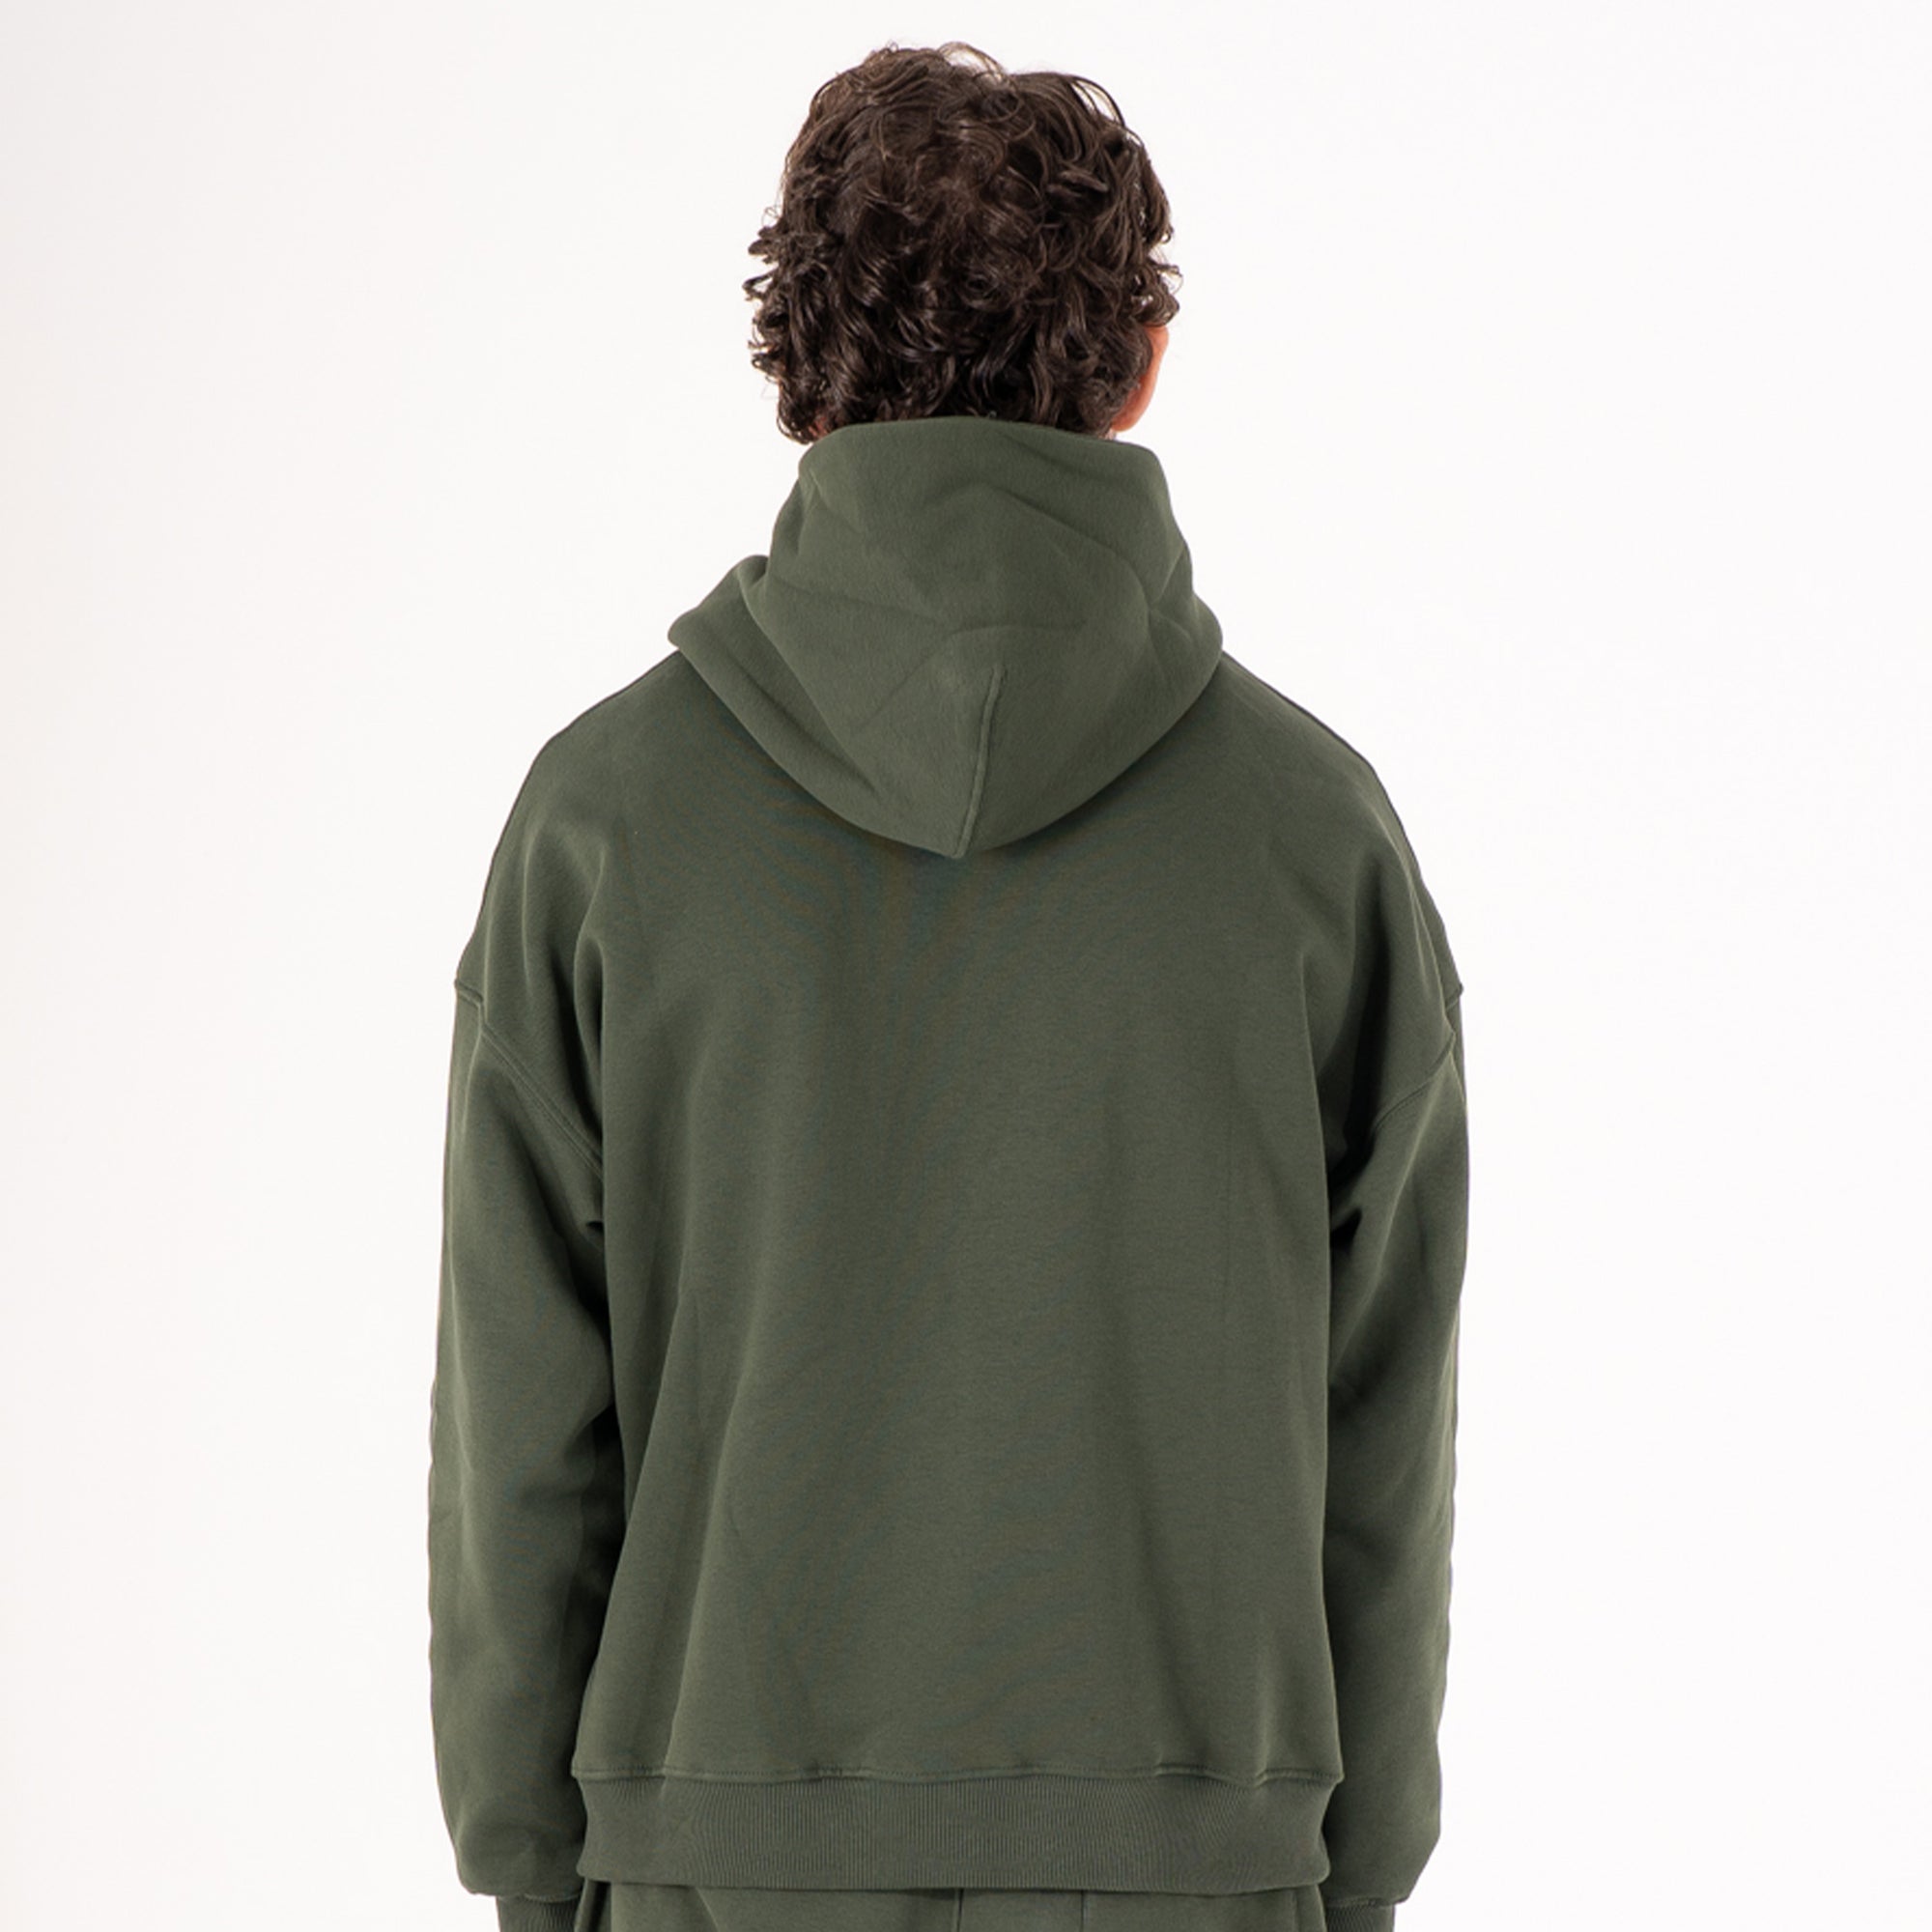 Melton olive hoodie